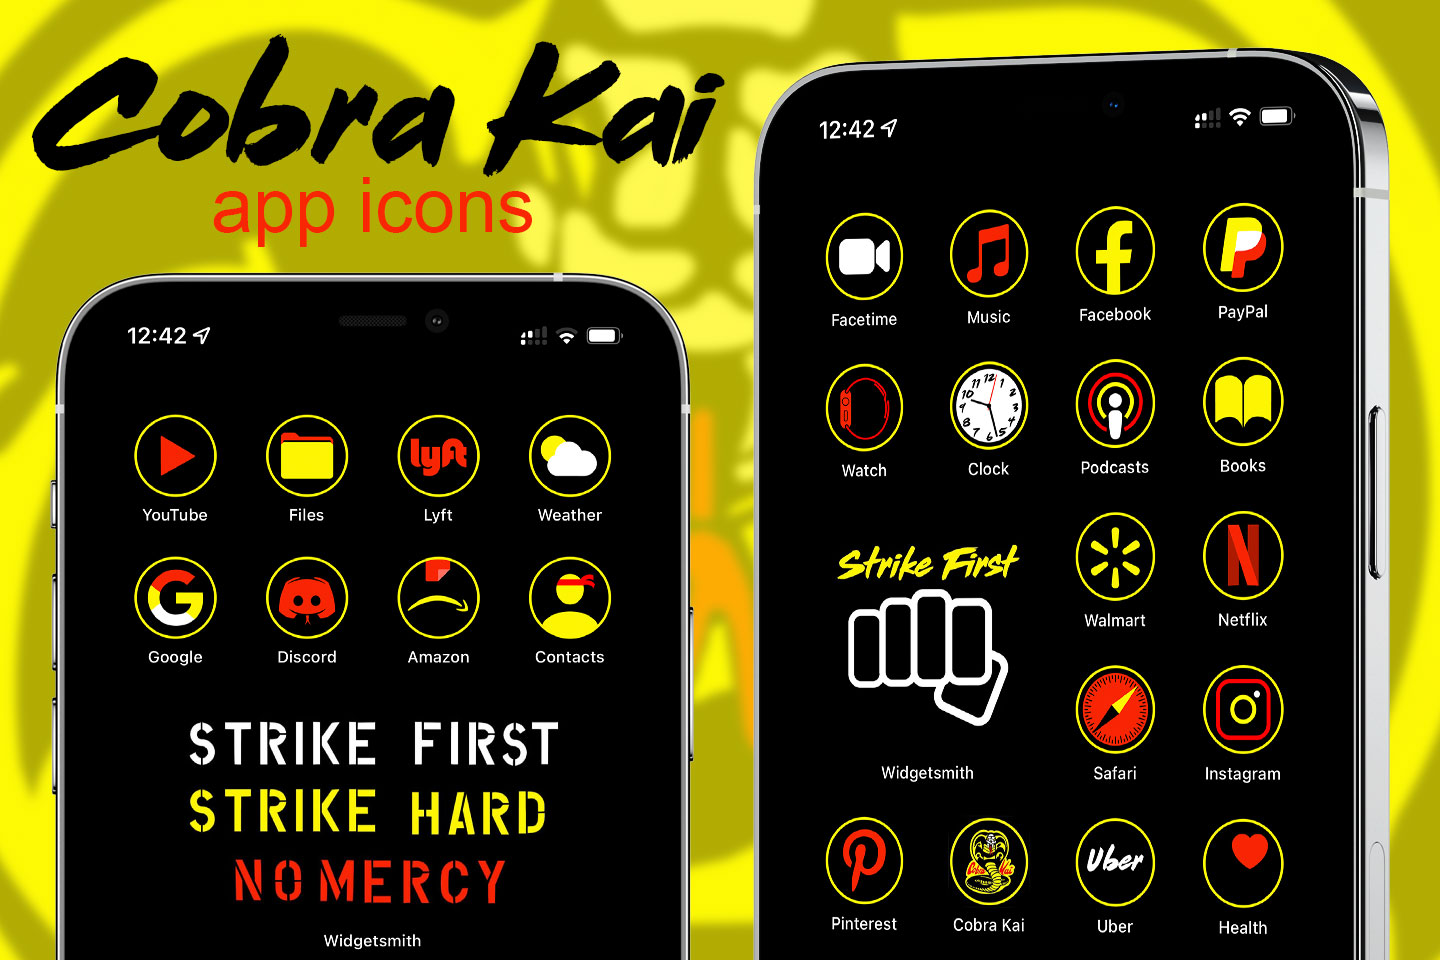 cobra kai app icons pack